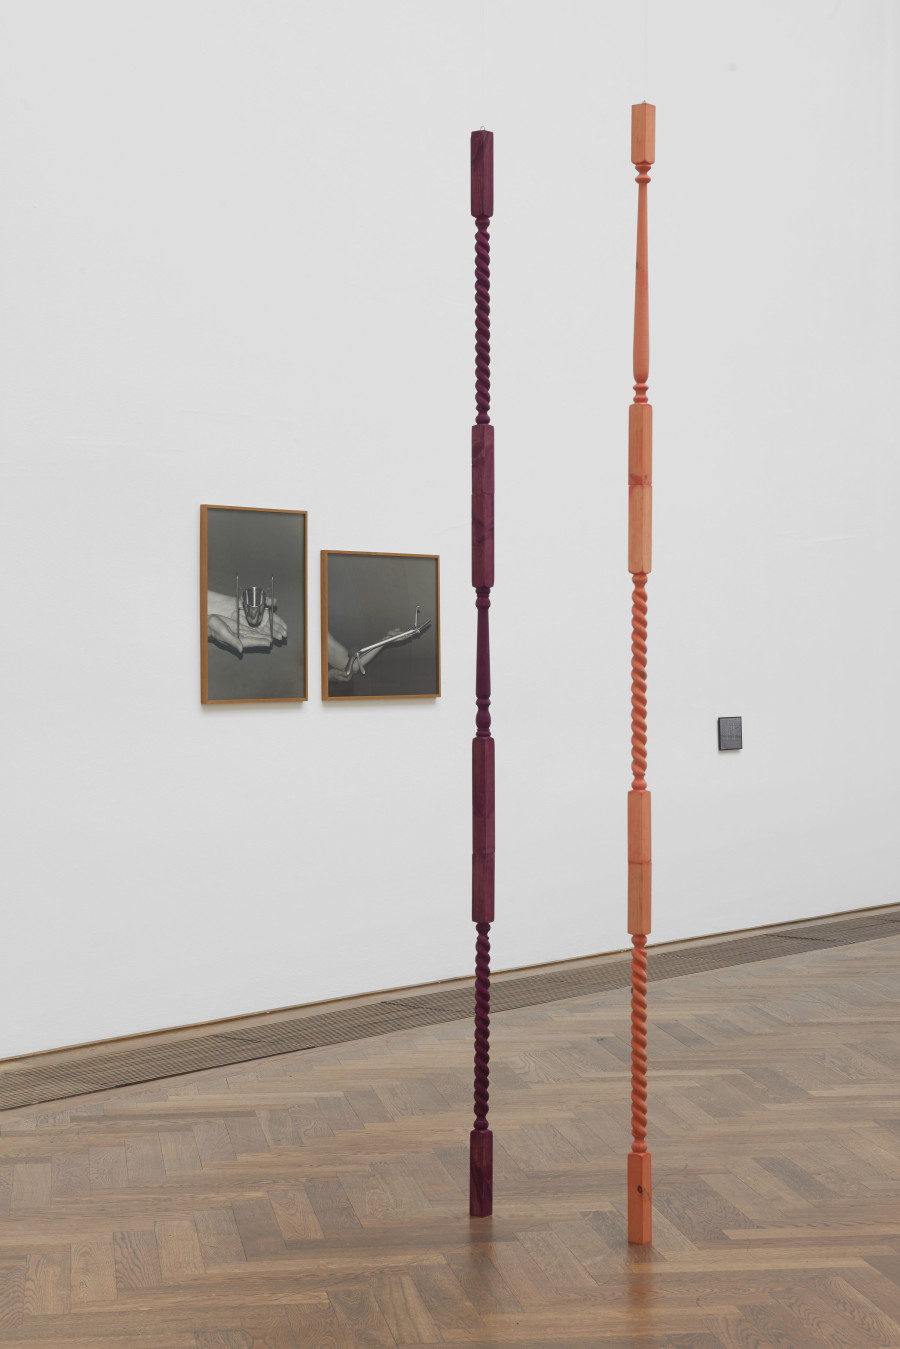 Joanna Piotrowska, installation view, Stable Vices, Kunsthalle Basel, 2019. Photo: Philipp Hänger / Kunsthalle Basel